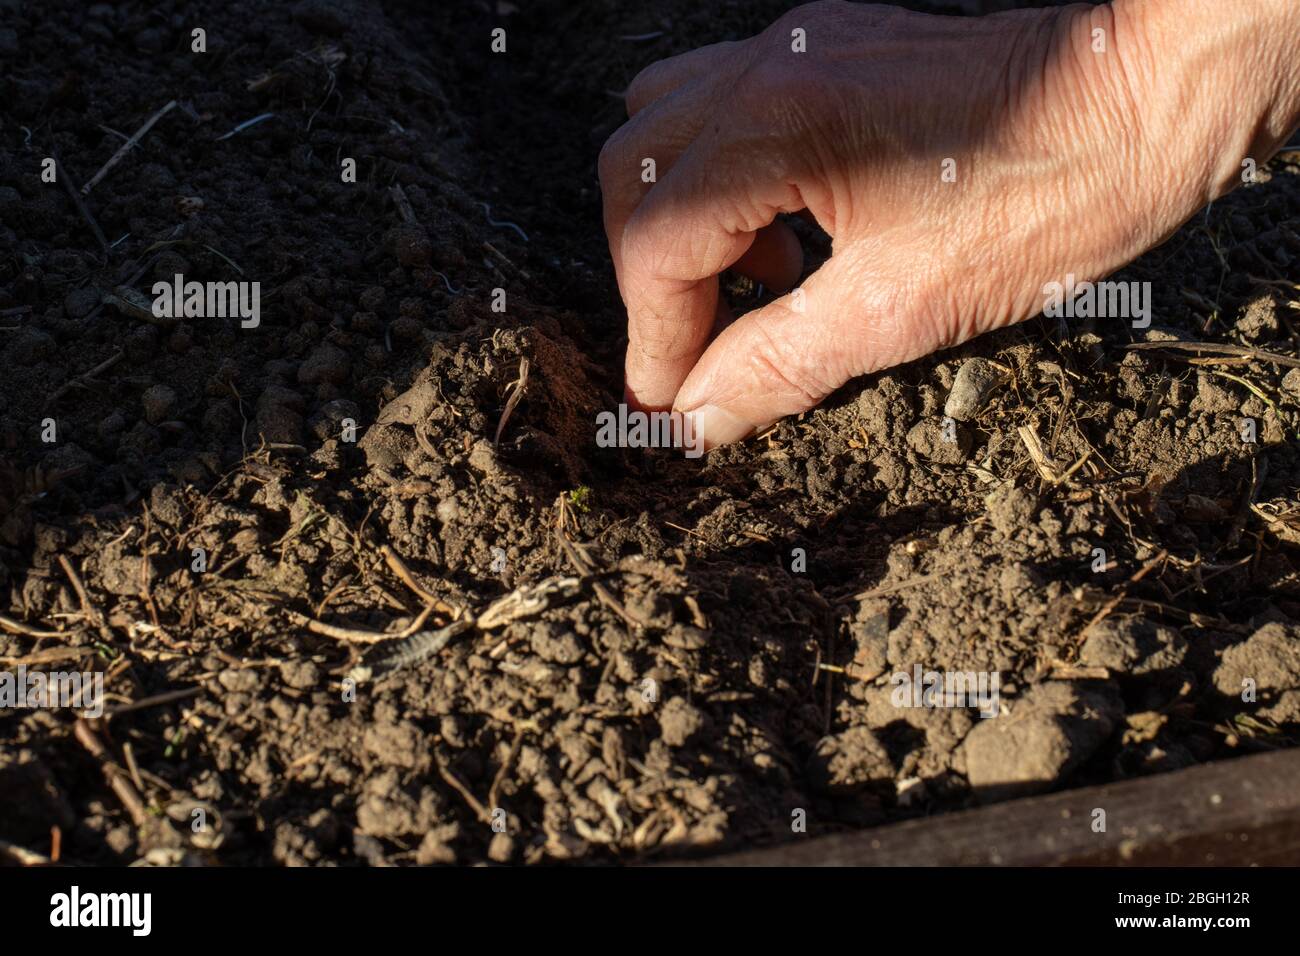 Senior woman planting vegetable seeds in home garden setting symbolizing gardening to ensure food supply Stock Photo